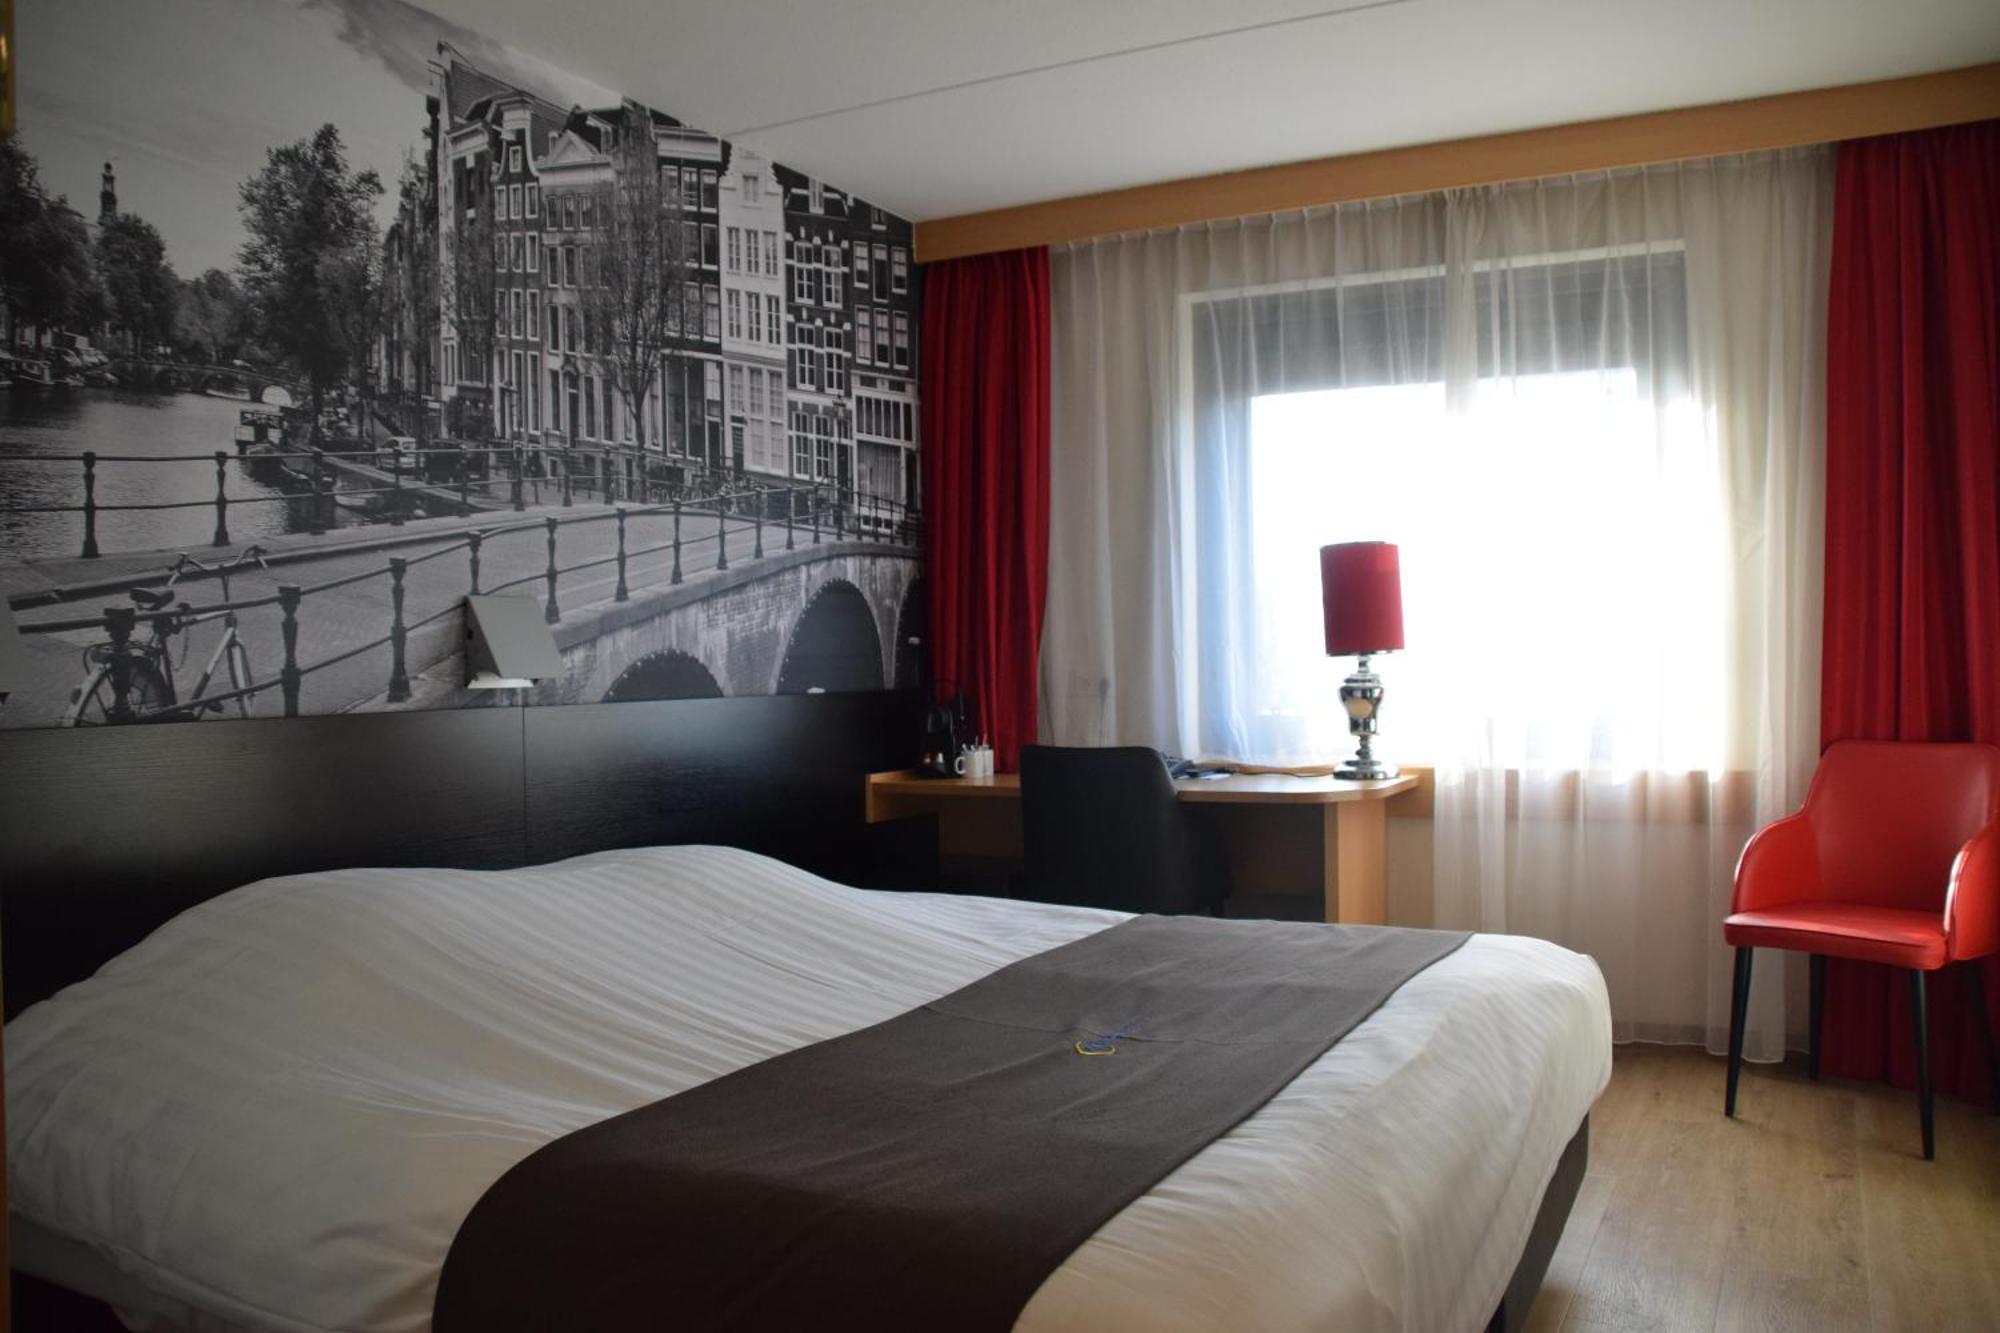 Bastion Hotel Leiden Voorschoten מראה חיצוני תמונה